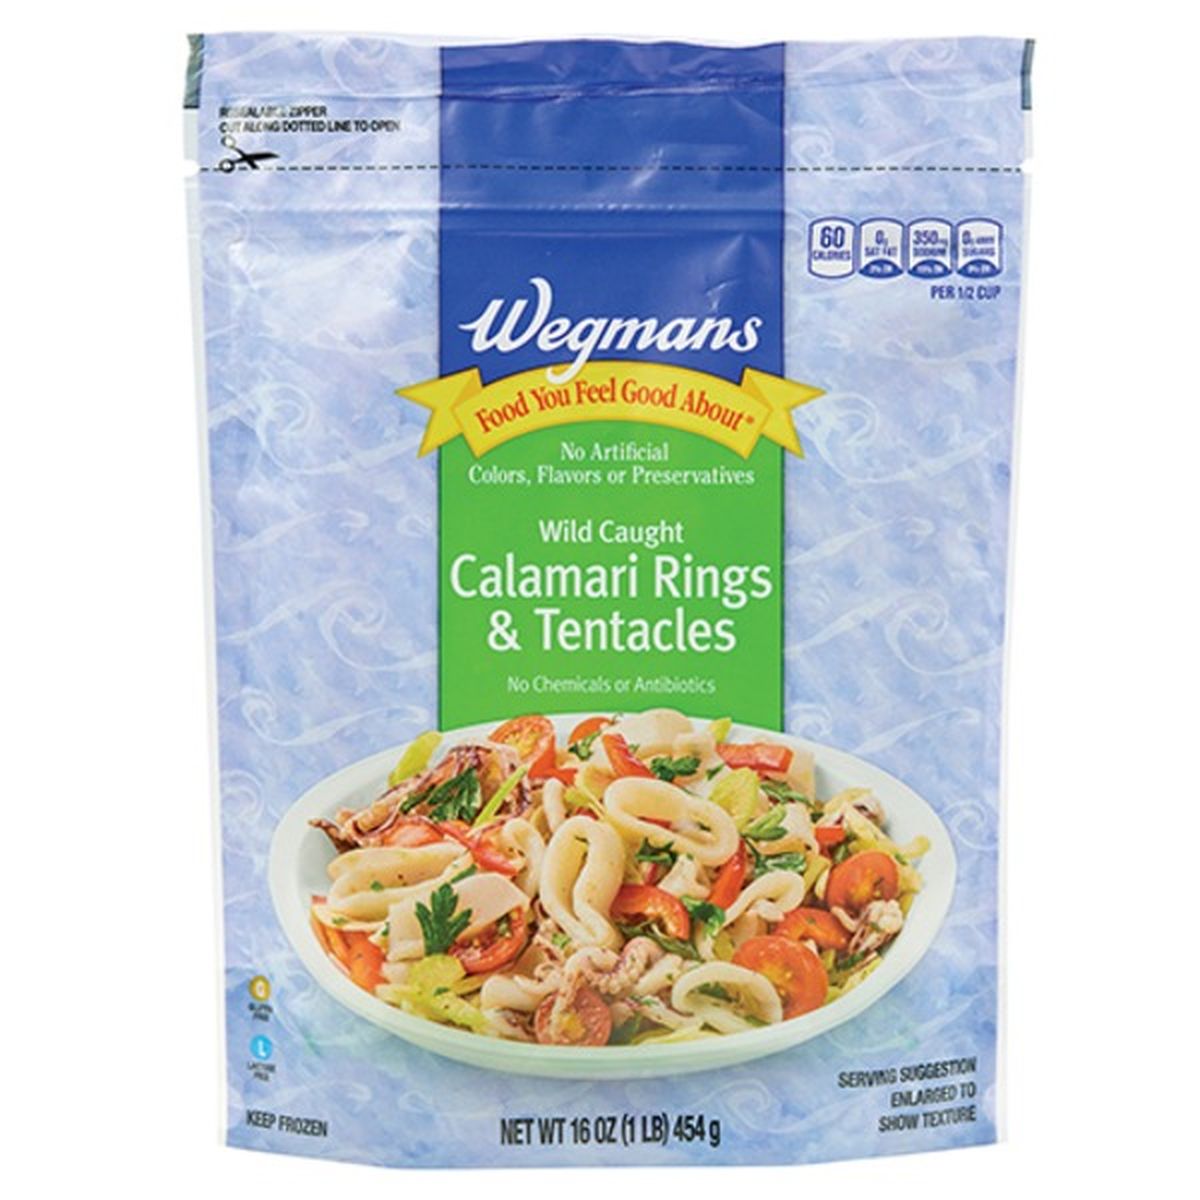 Calories in Wegmans Frozen Calamari Rings & Tentacles